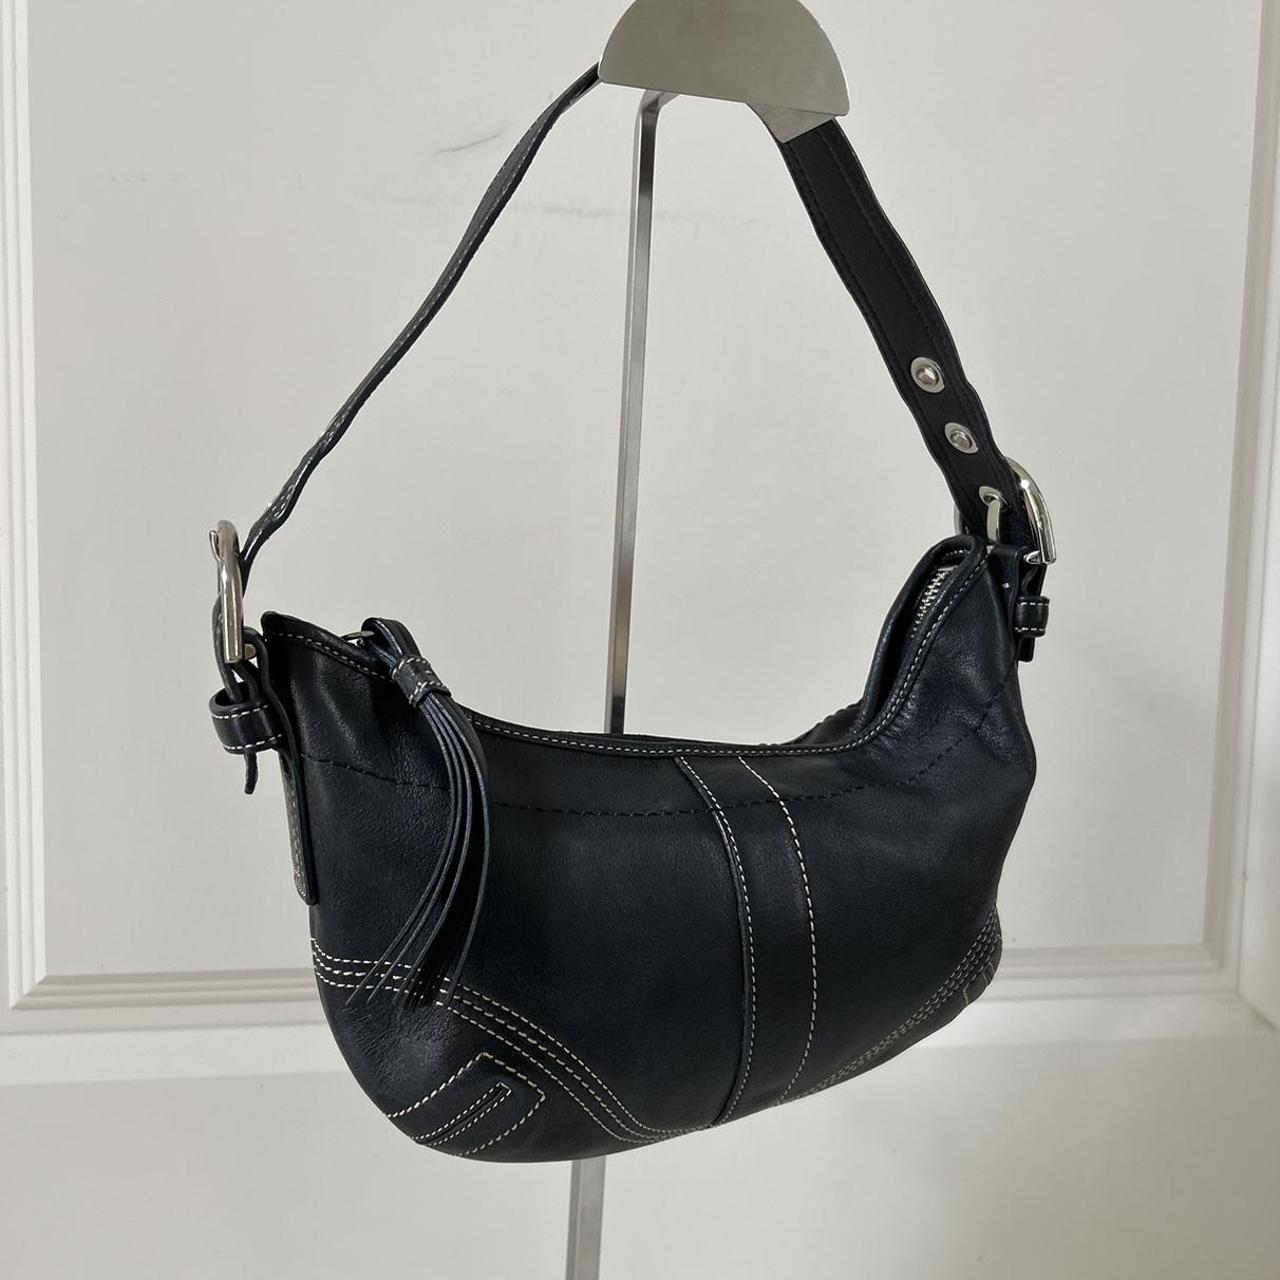 Authentic vintage coach shoulder bag Black leather... - Depop